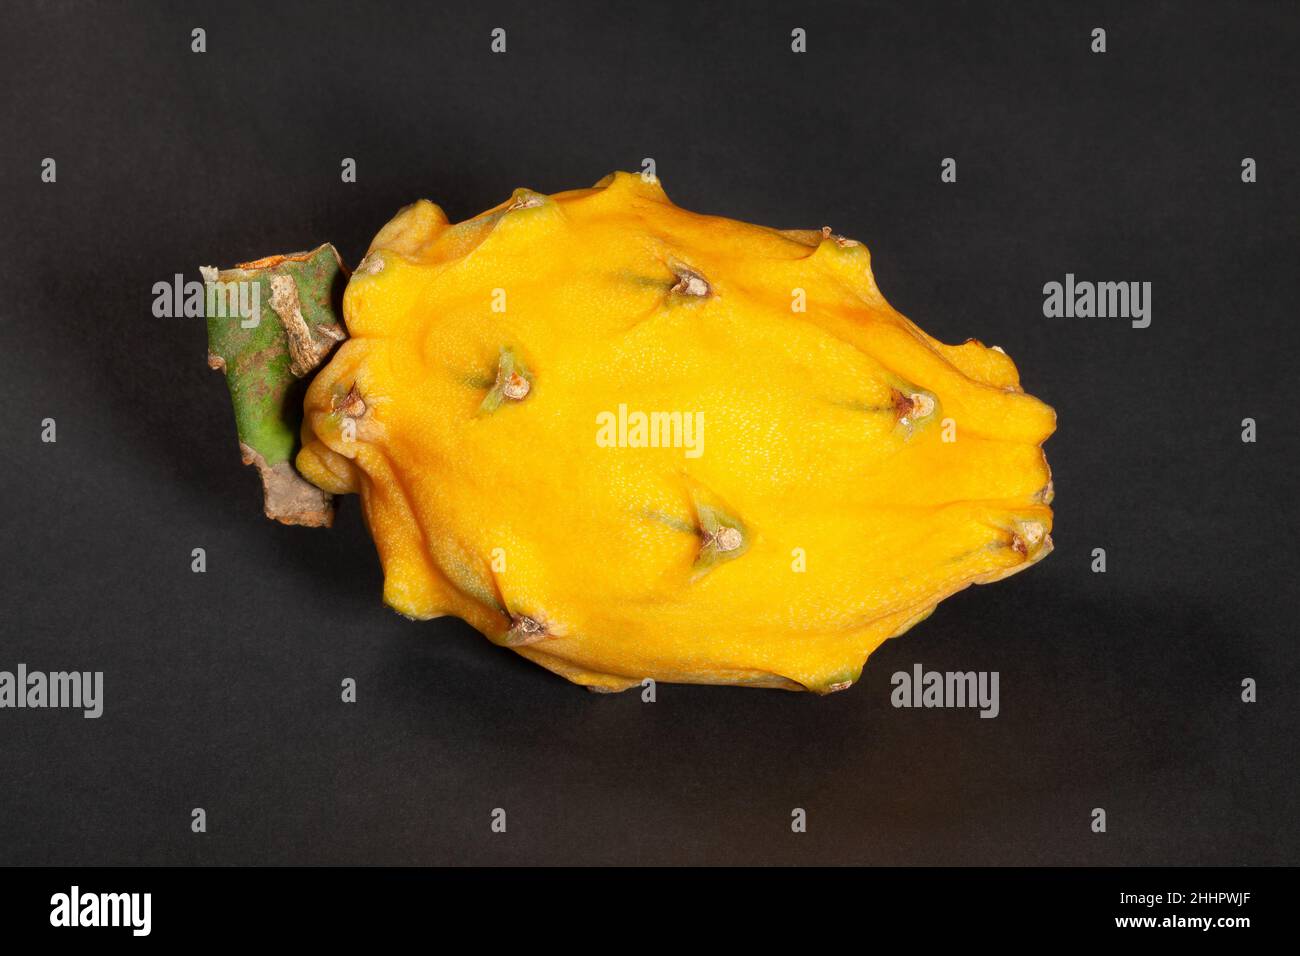 yellow dragon fruit on black background Stock Photo